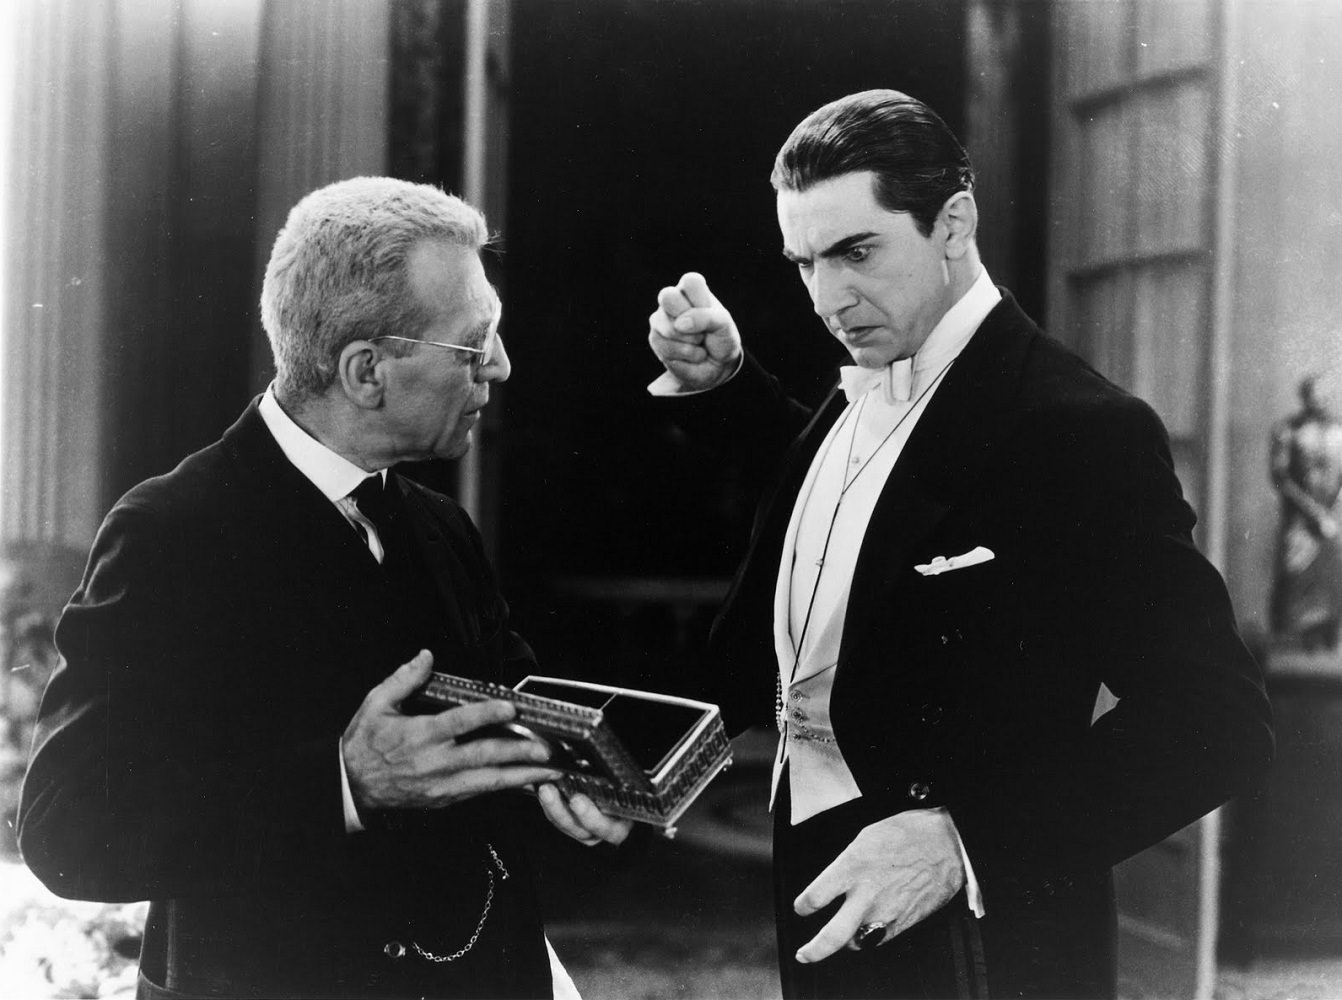 Edward Van Sloan and Bela Lugosi in Dracula, 1931